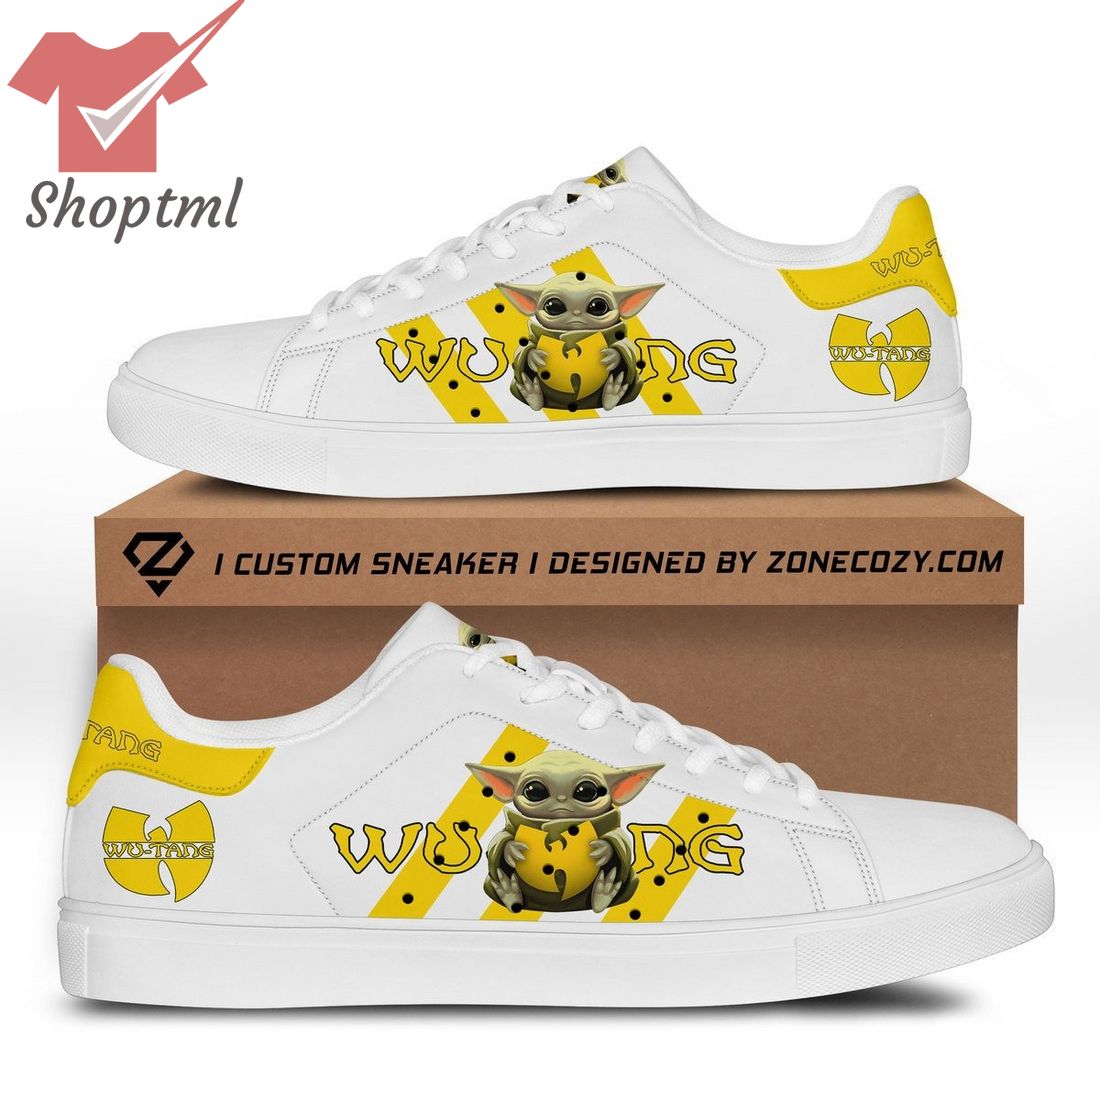 Wu-Tang baby yoda stan smith adidas shoes